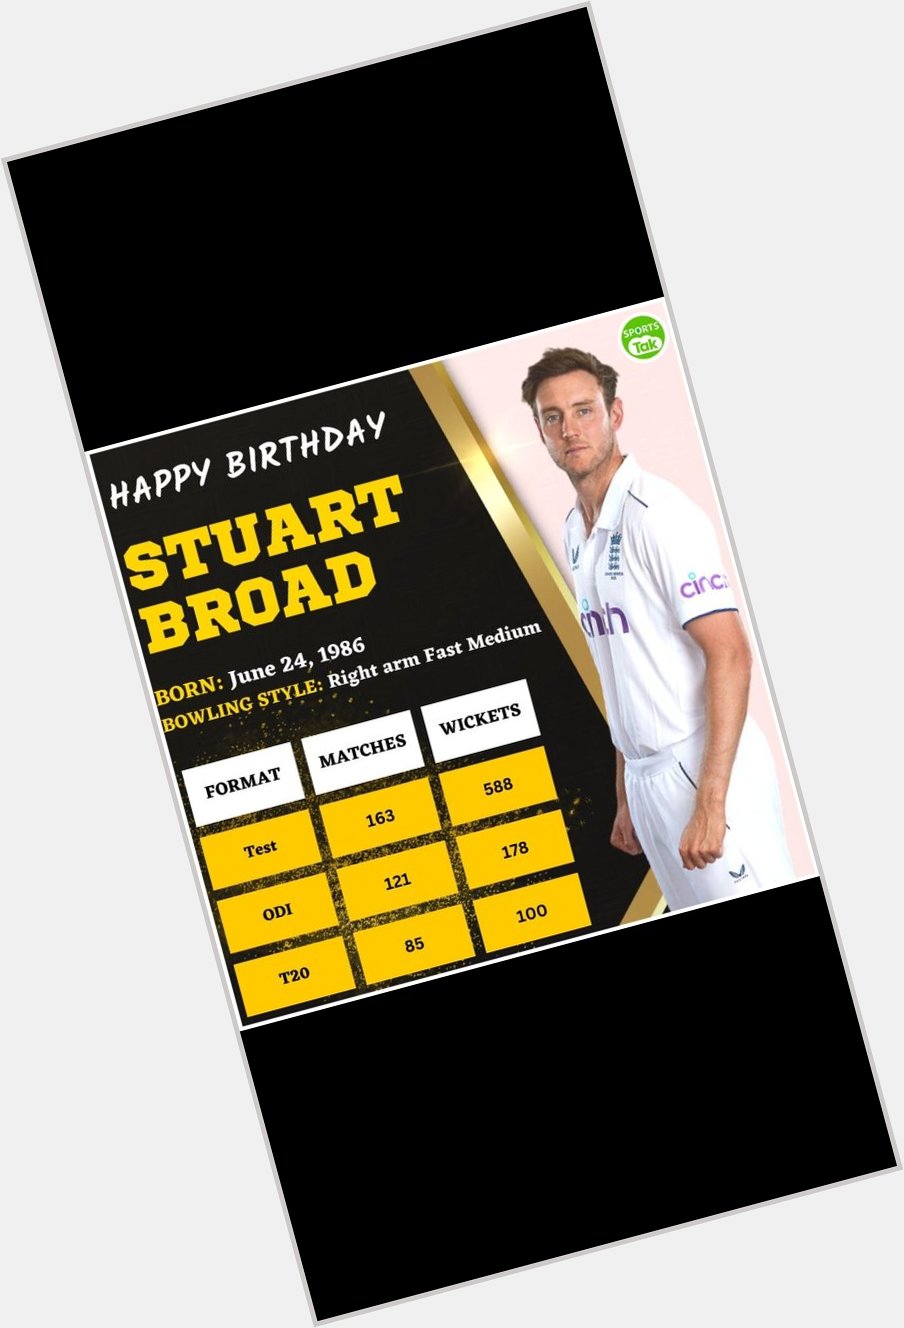 Happy birthday Stuart broad 